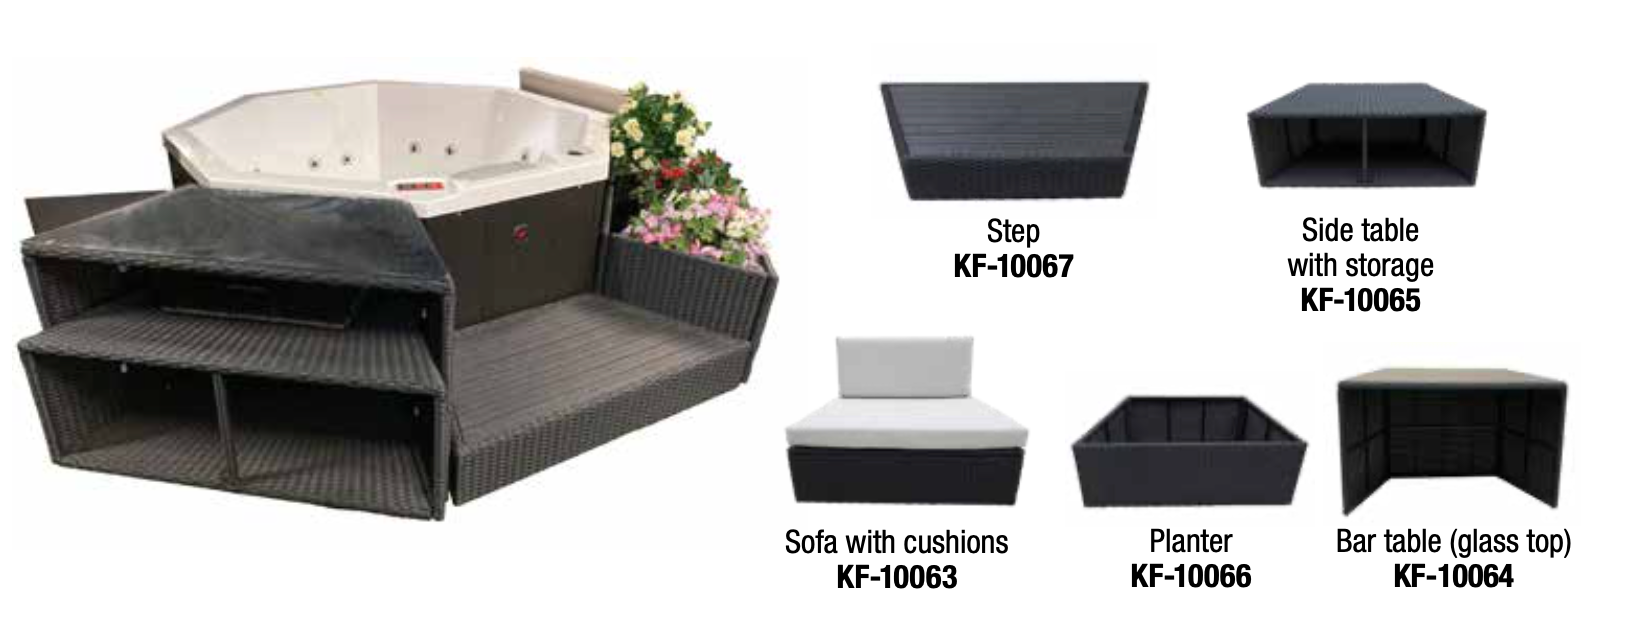 Canadian Spa Company_KF-10063_Muskoka Sofa_Surround Furniture_Hot Tubs